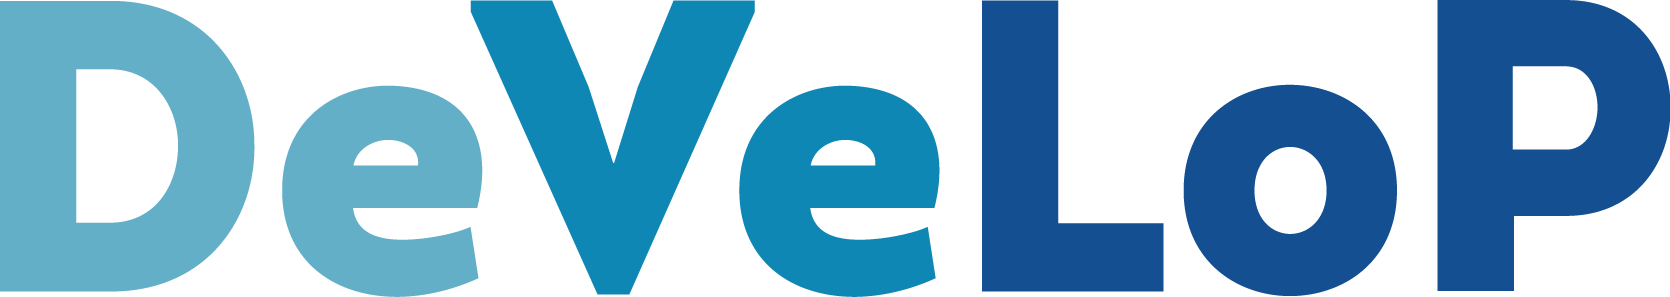 Develop.gr logo